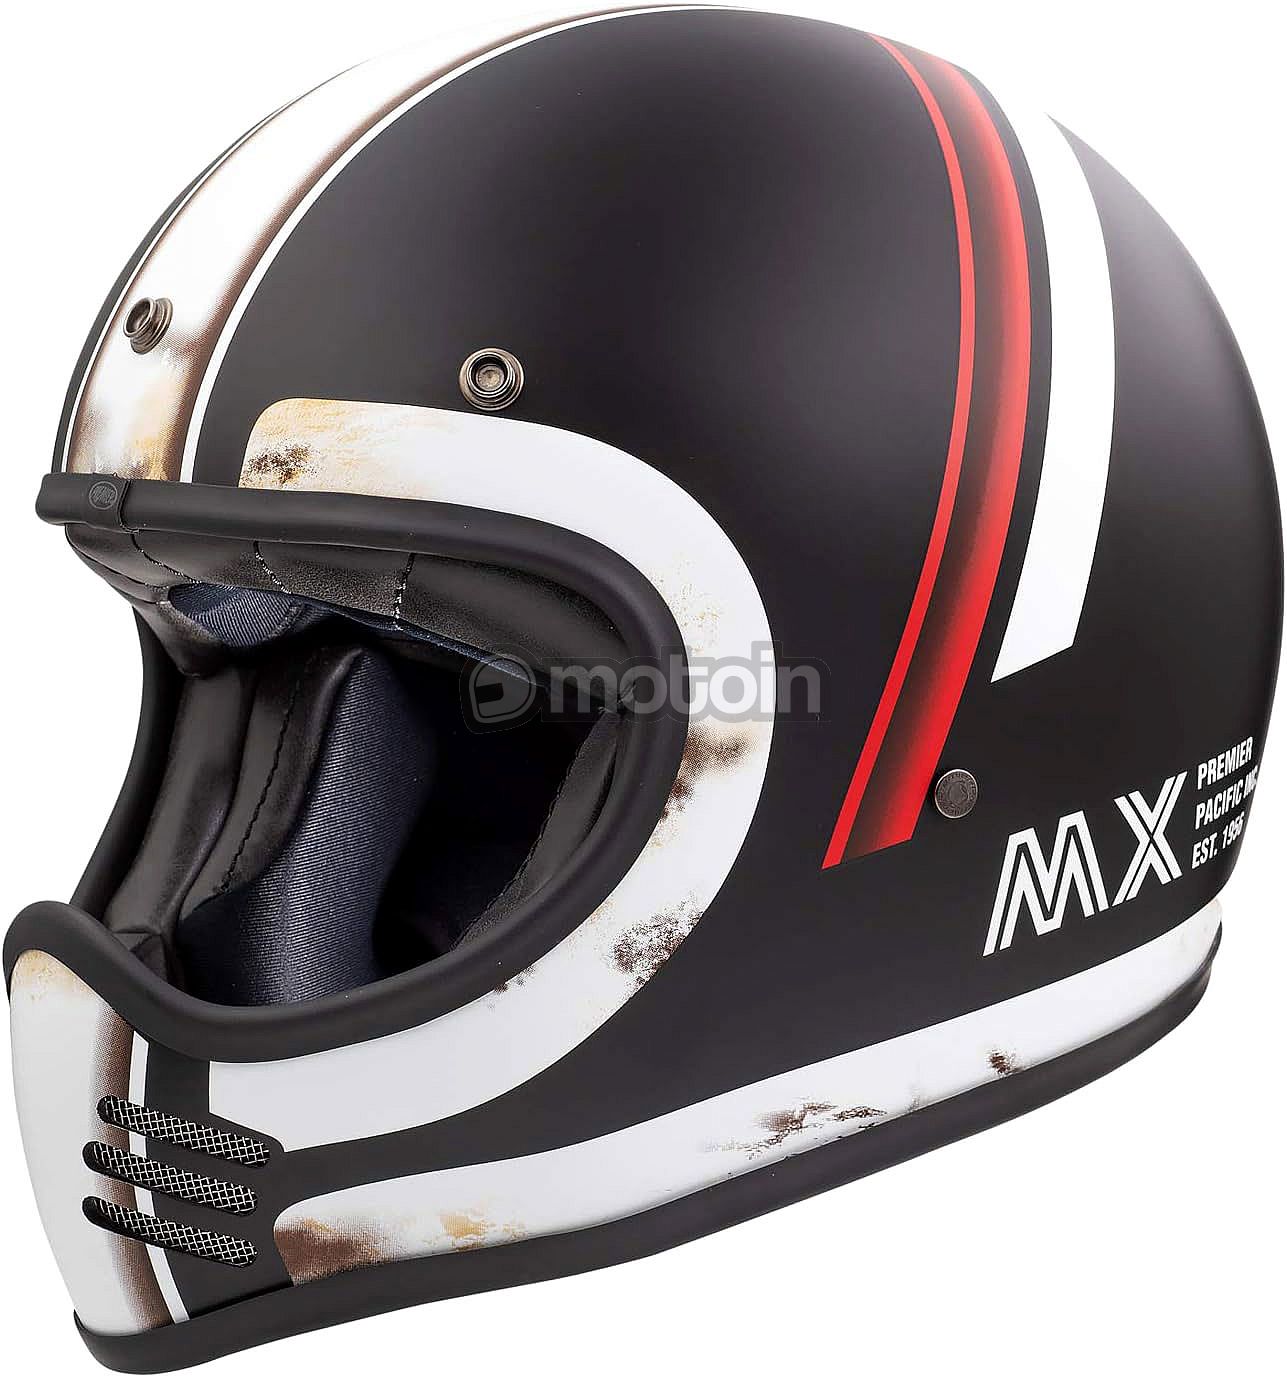 Premier Trophy MX DO O.S., integreret hjelm